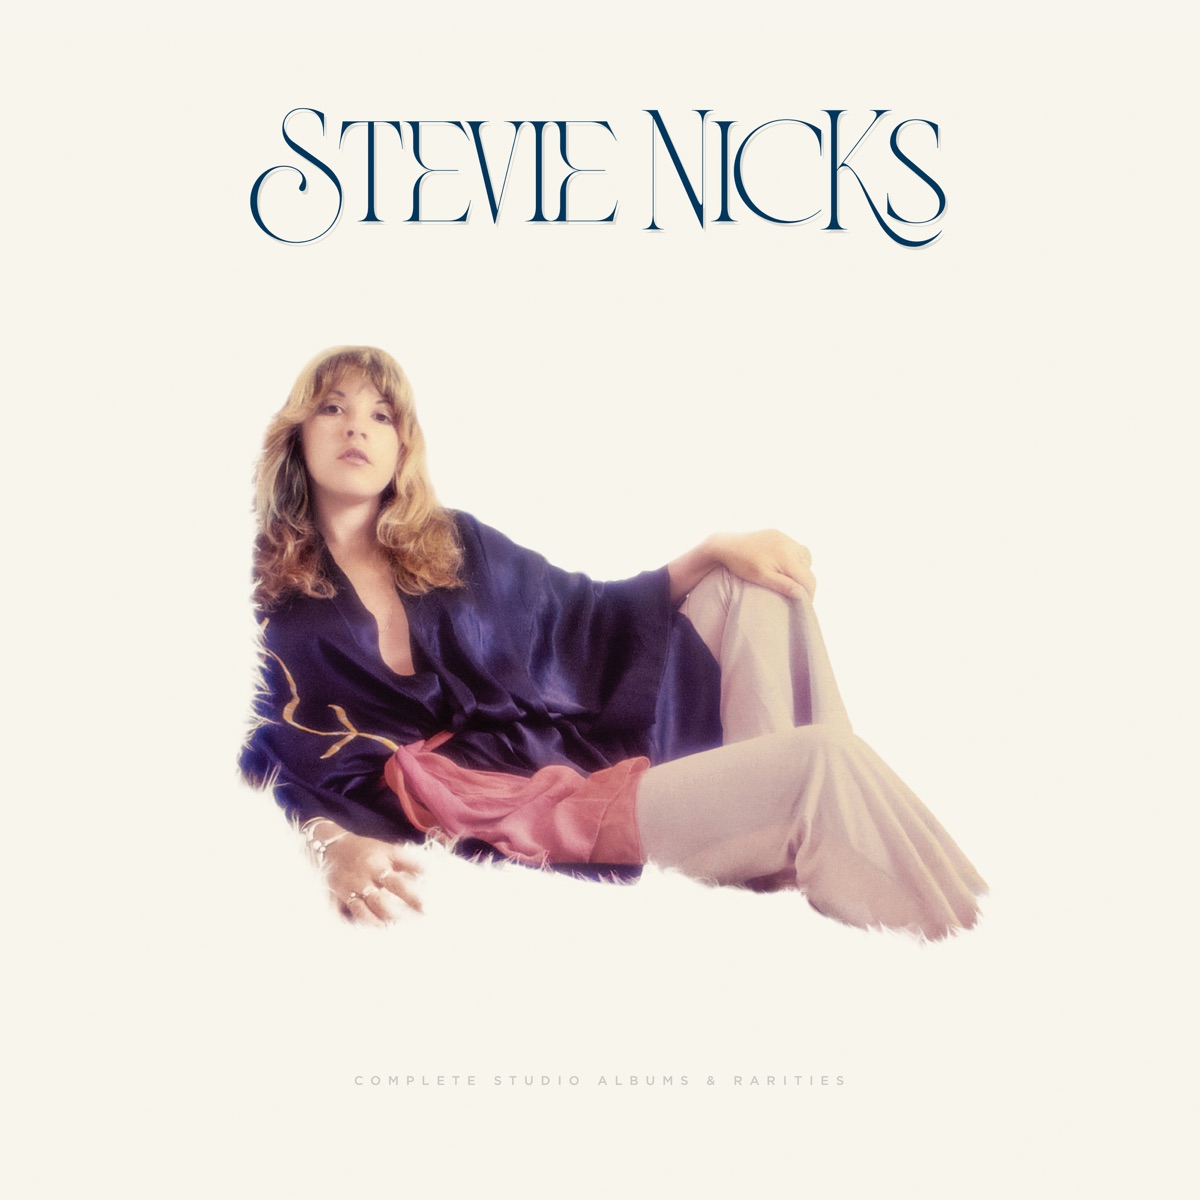 Complete Studio Albums & Rarities - Album by Stevie Nicks - Apple